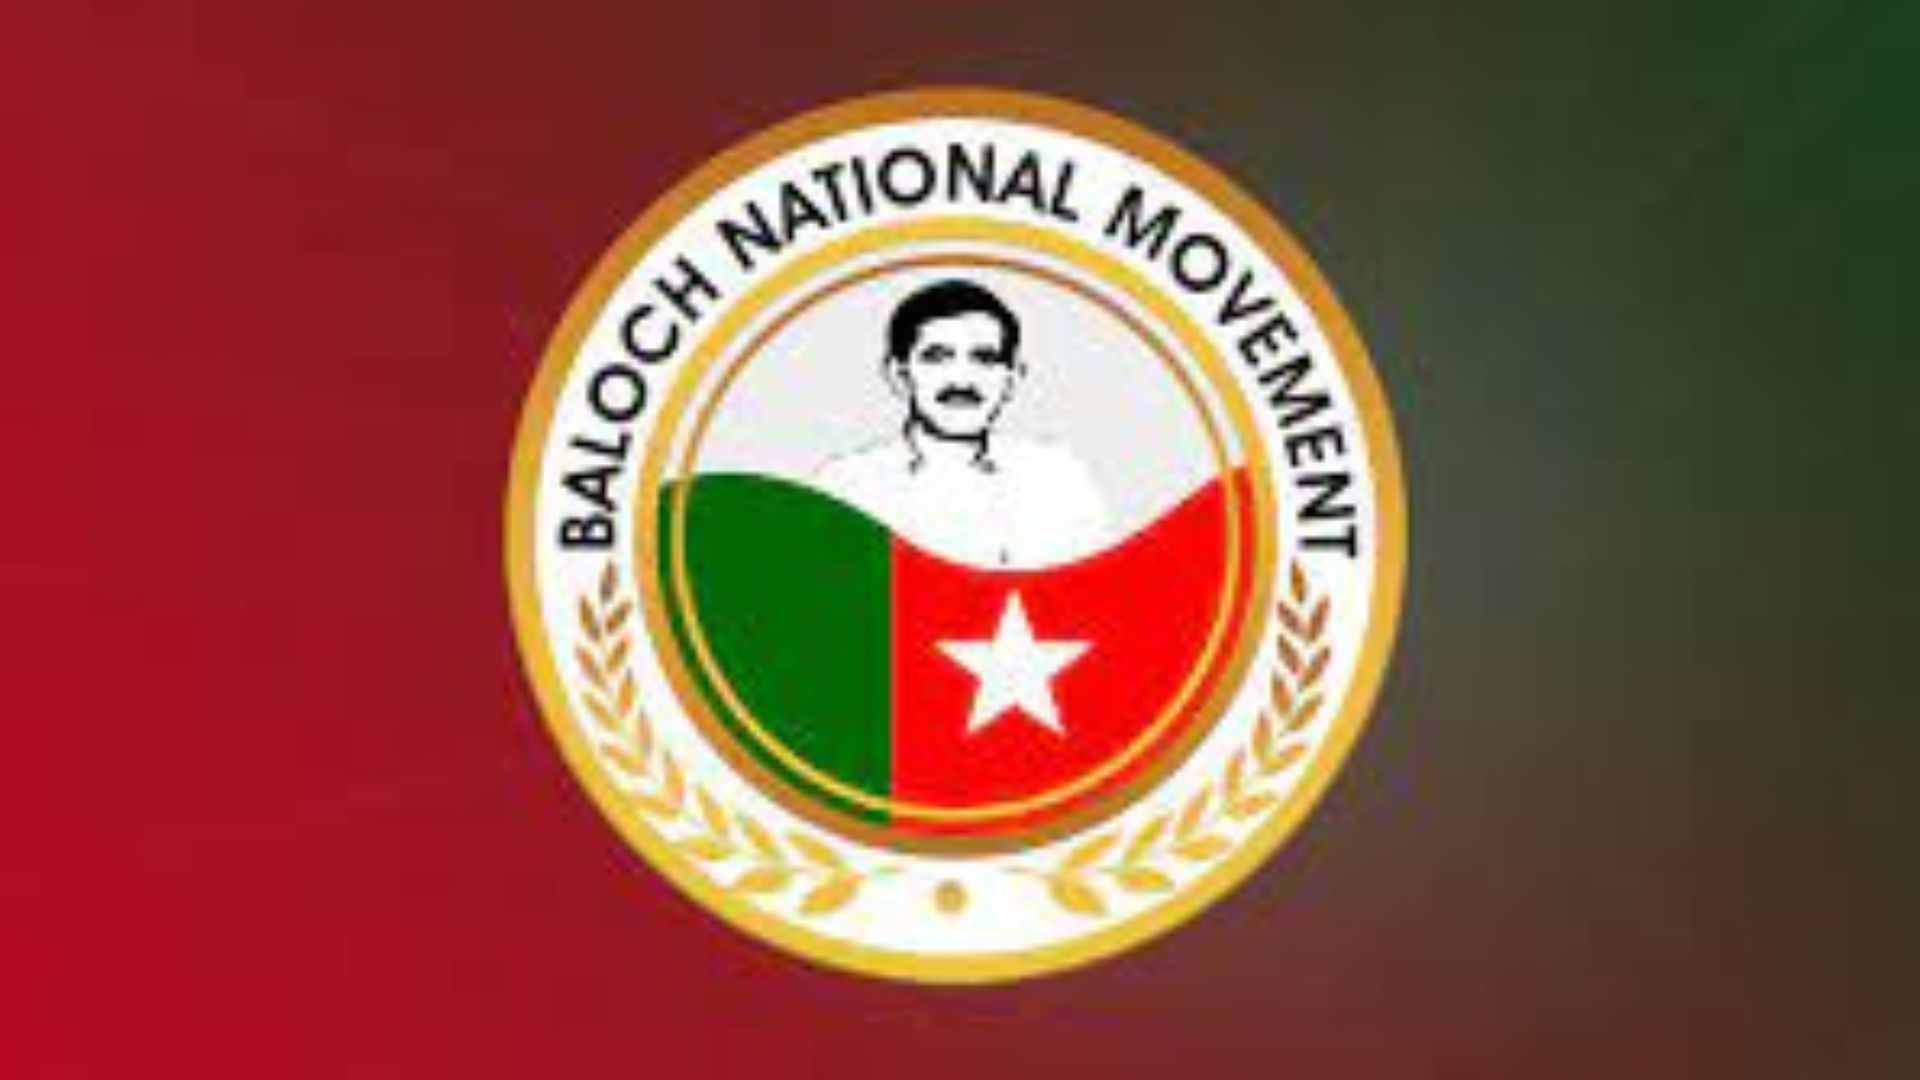 Baloch National Movement (BNM) Logo